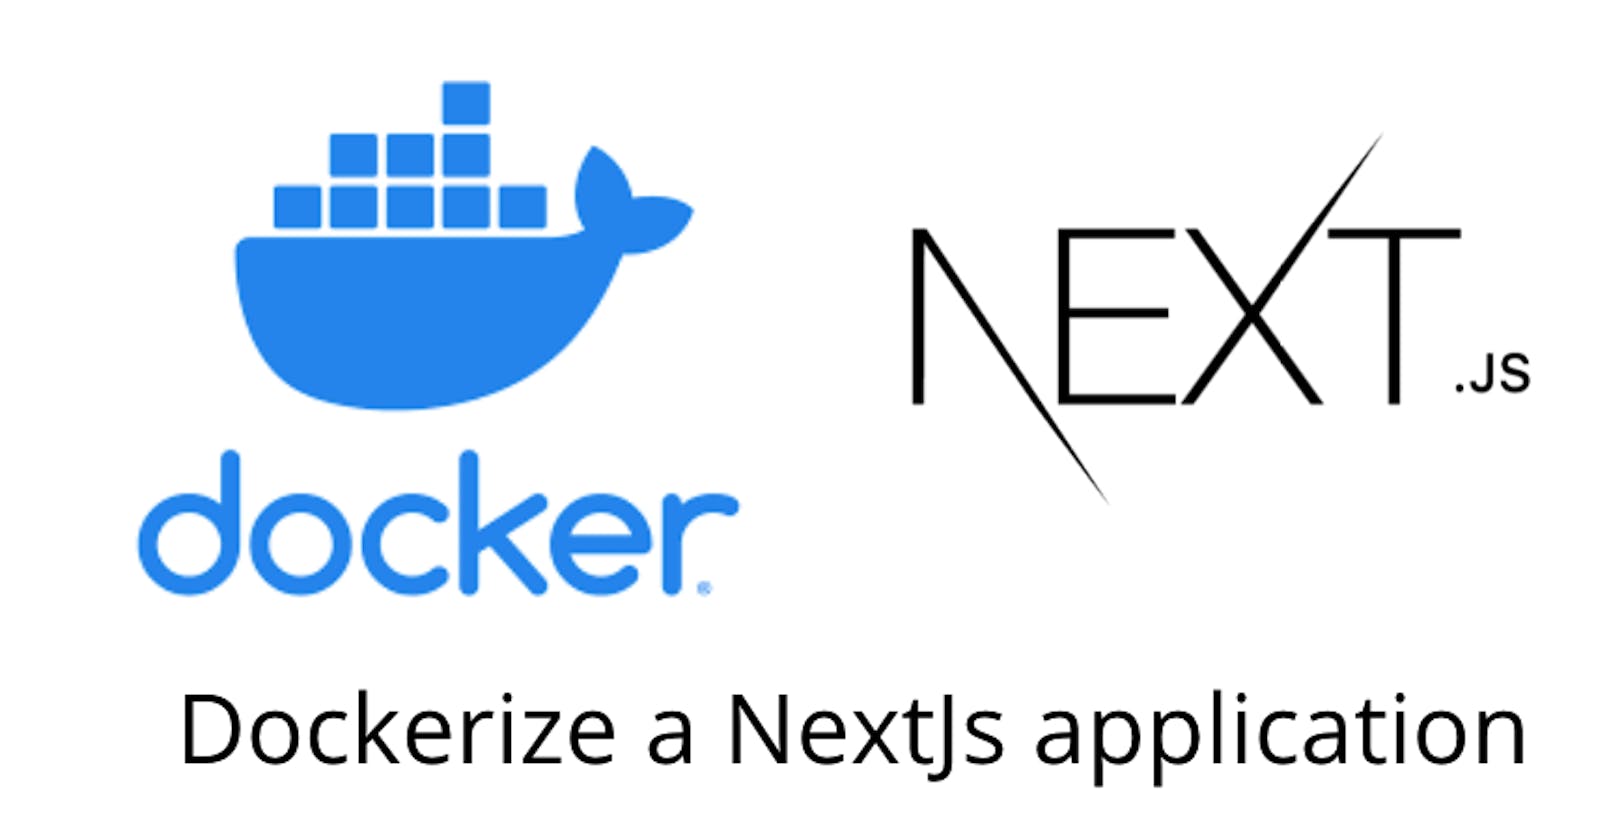 How to Dockerize a NextJs application?